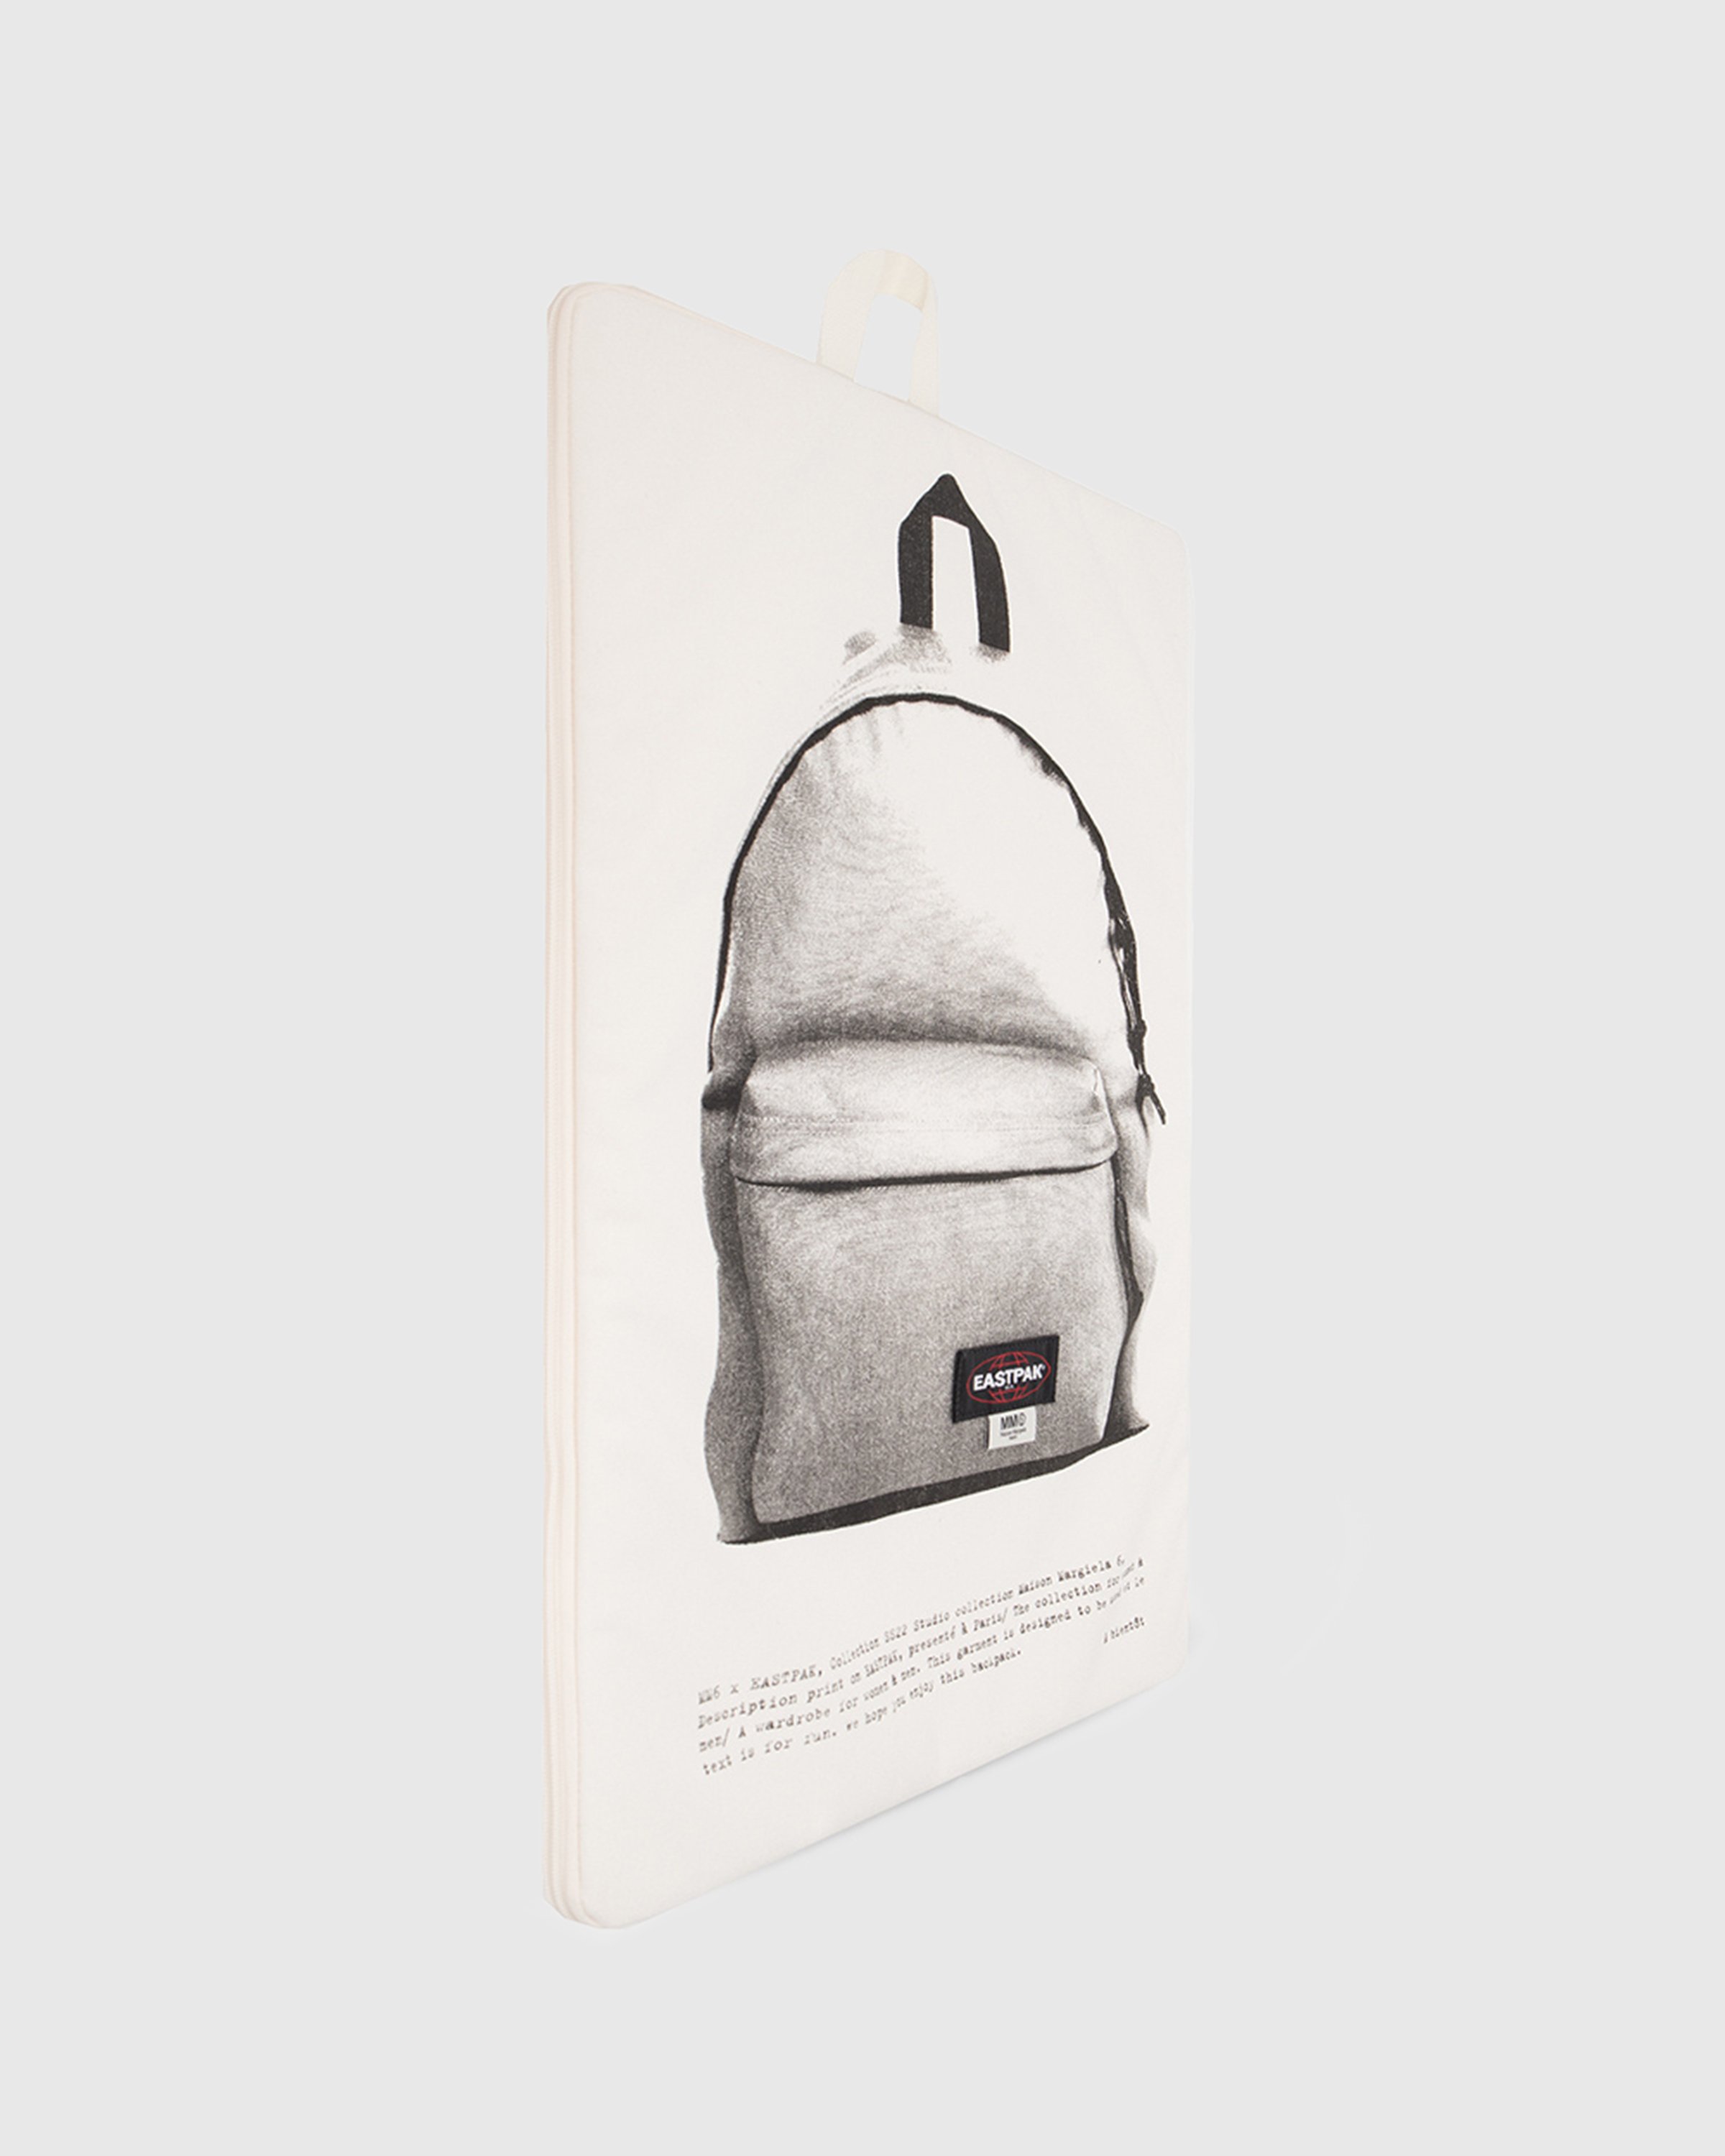 MM6 Maison Margiela x Eastpak - Zaino Backpack Whisper White - Accessories - White - Image 2